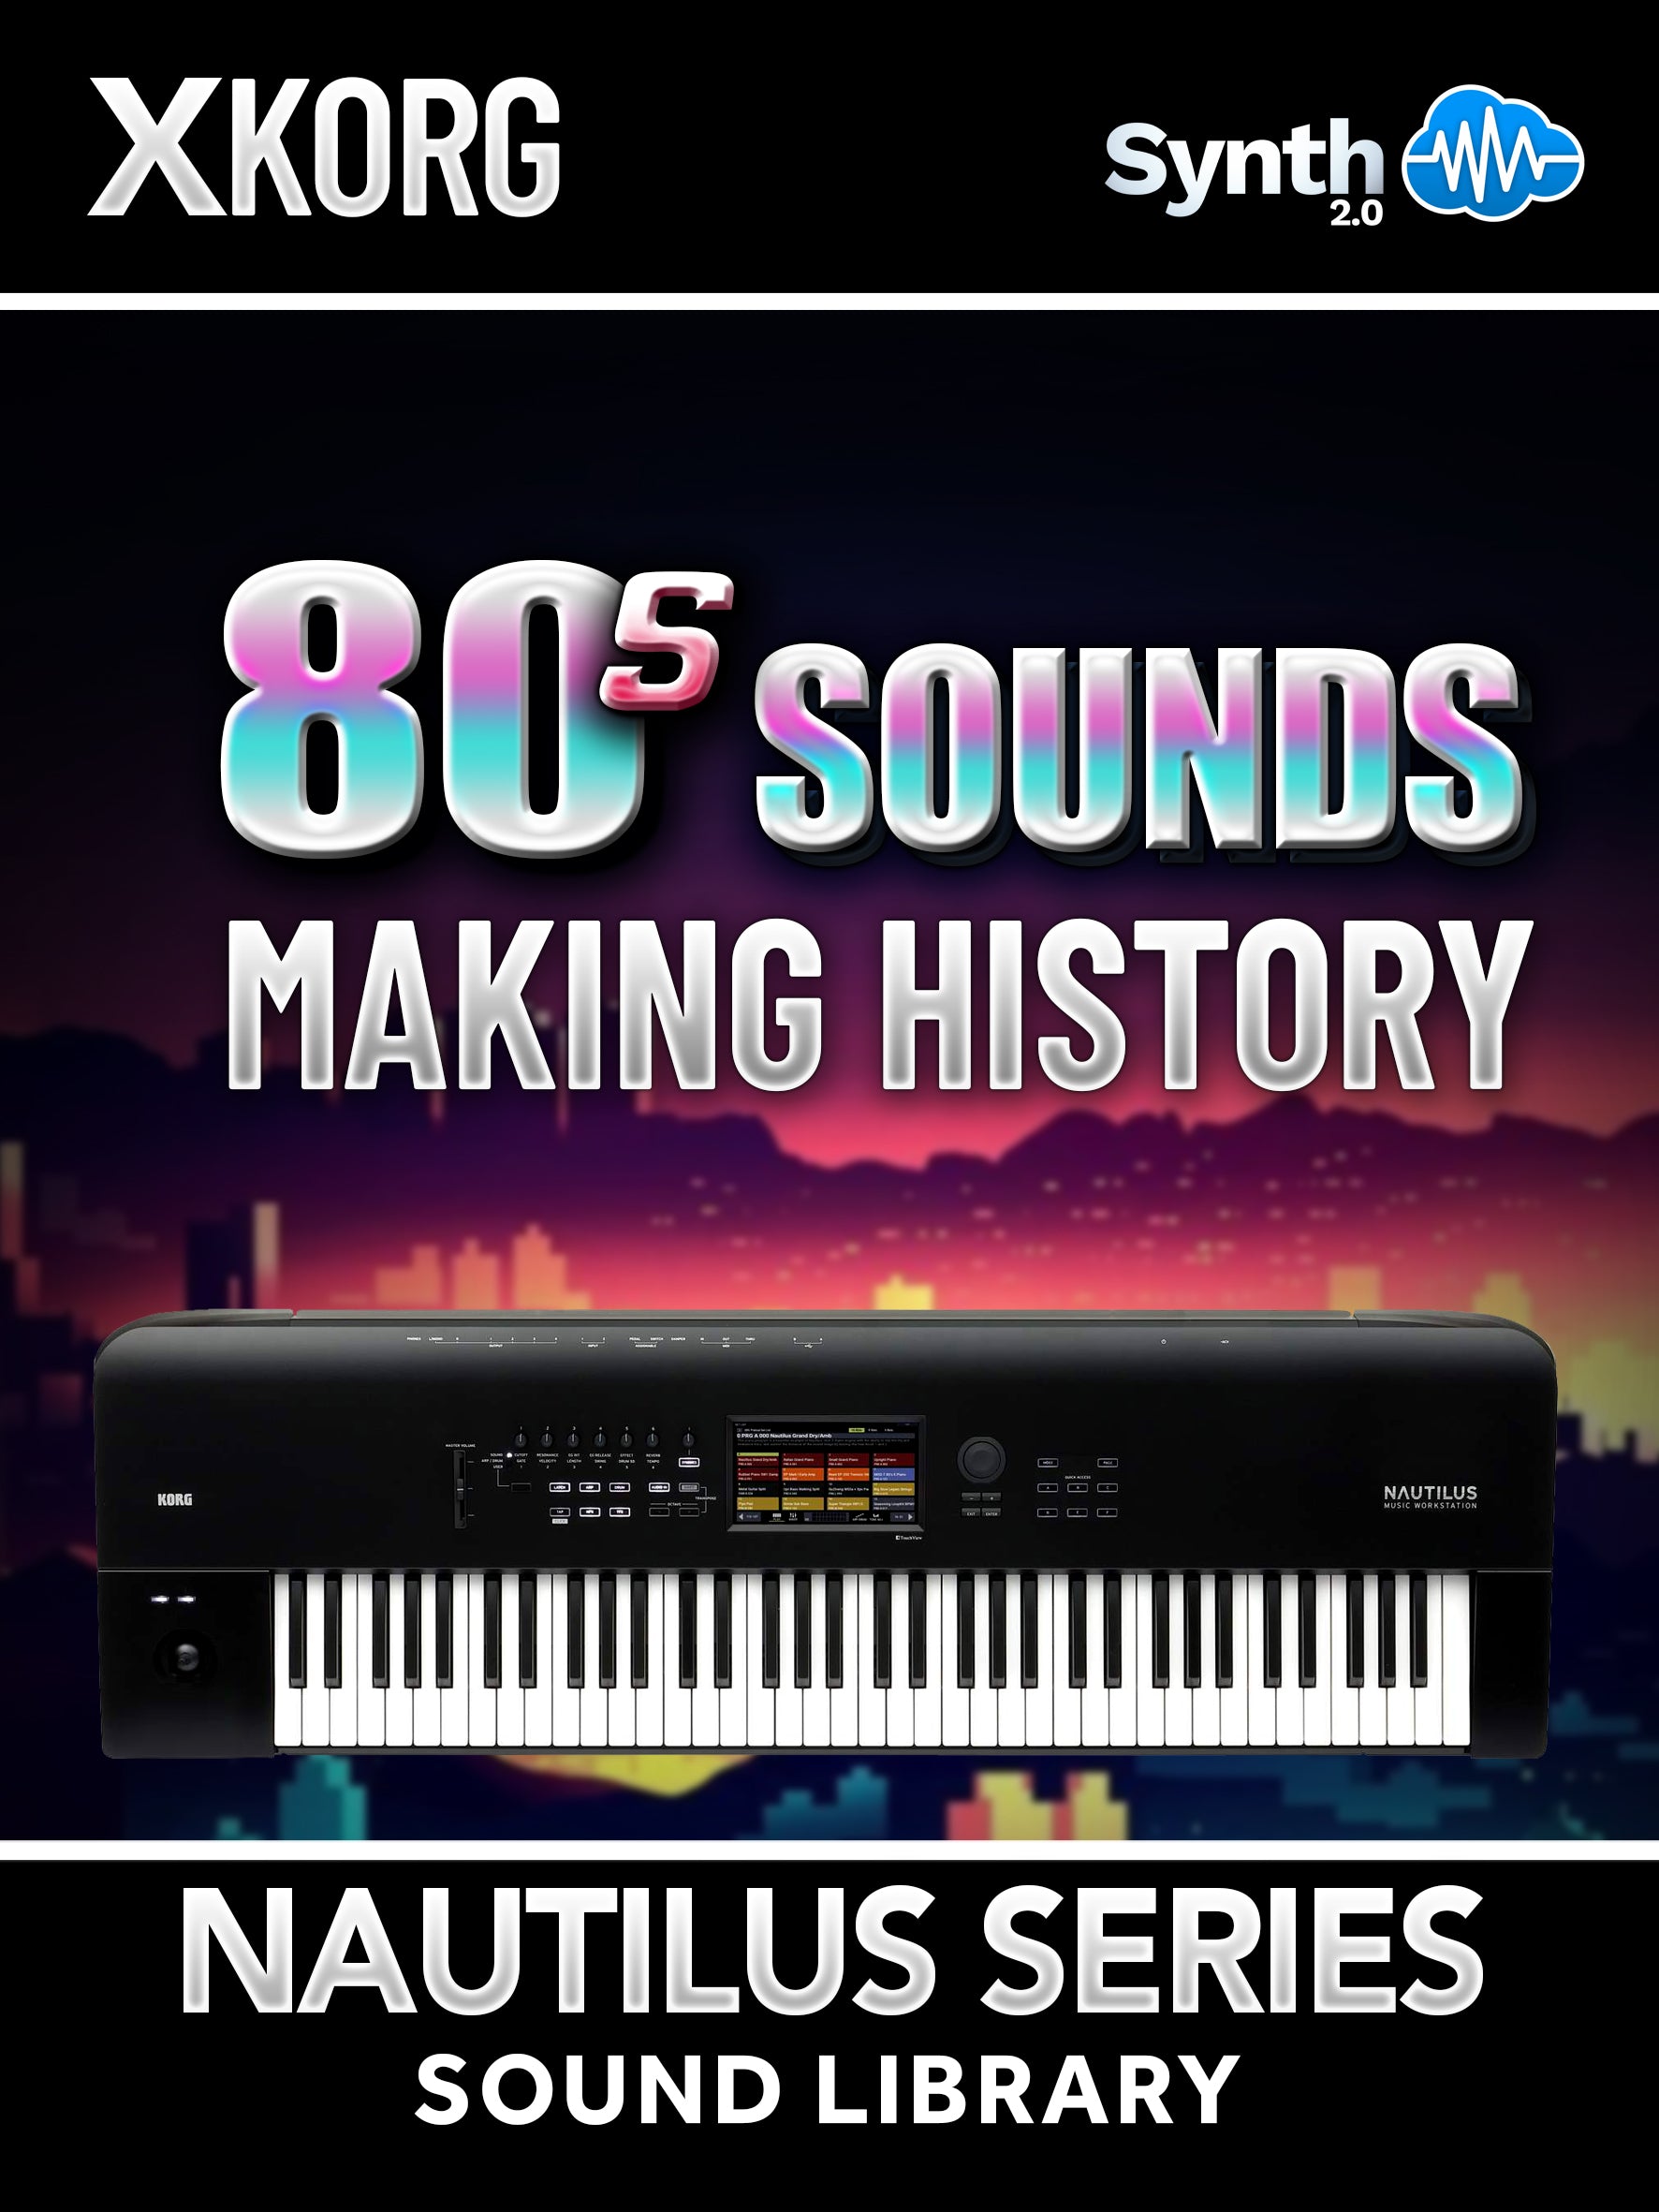 FPL034 - ( Bundle ) - Coverlogia + 80s Sounds - Making History - Korg Nautilus Series